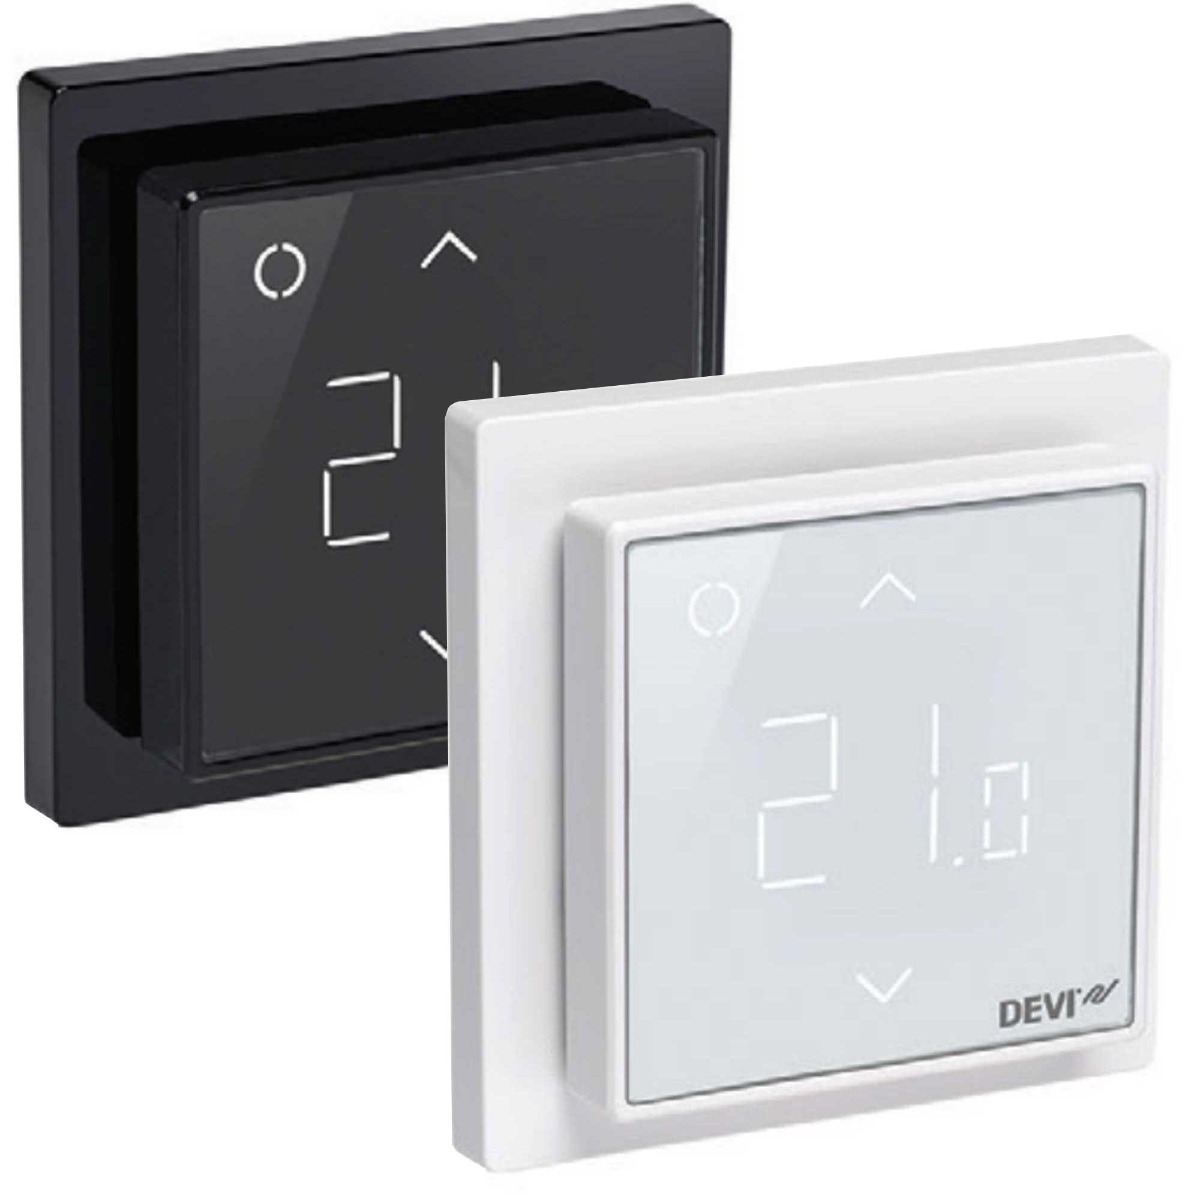 DEVIreg WiFi Smart Thermostat Programmable Timer